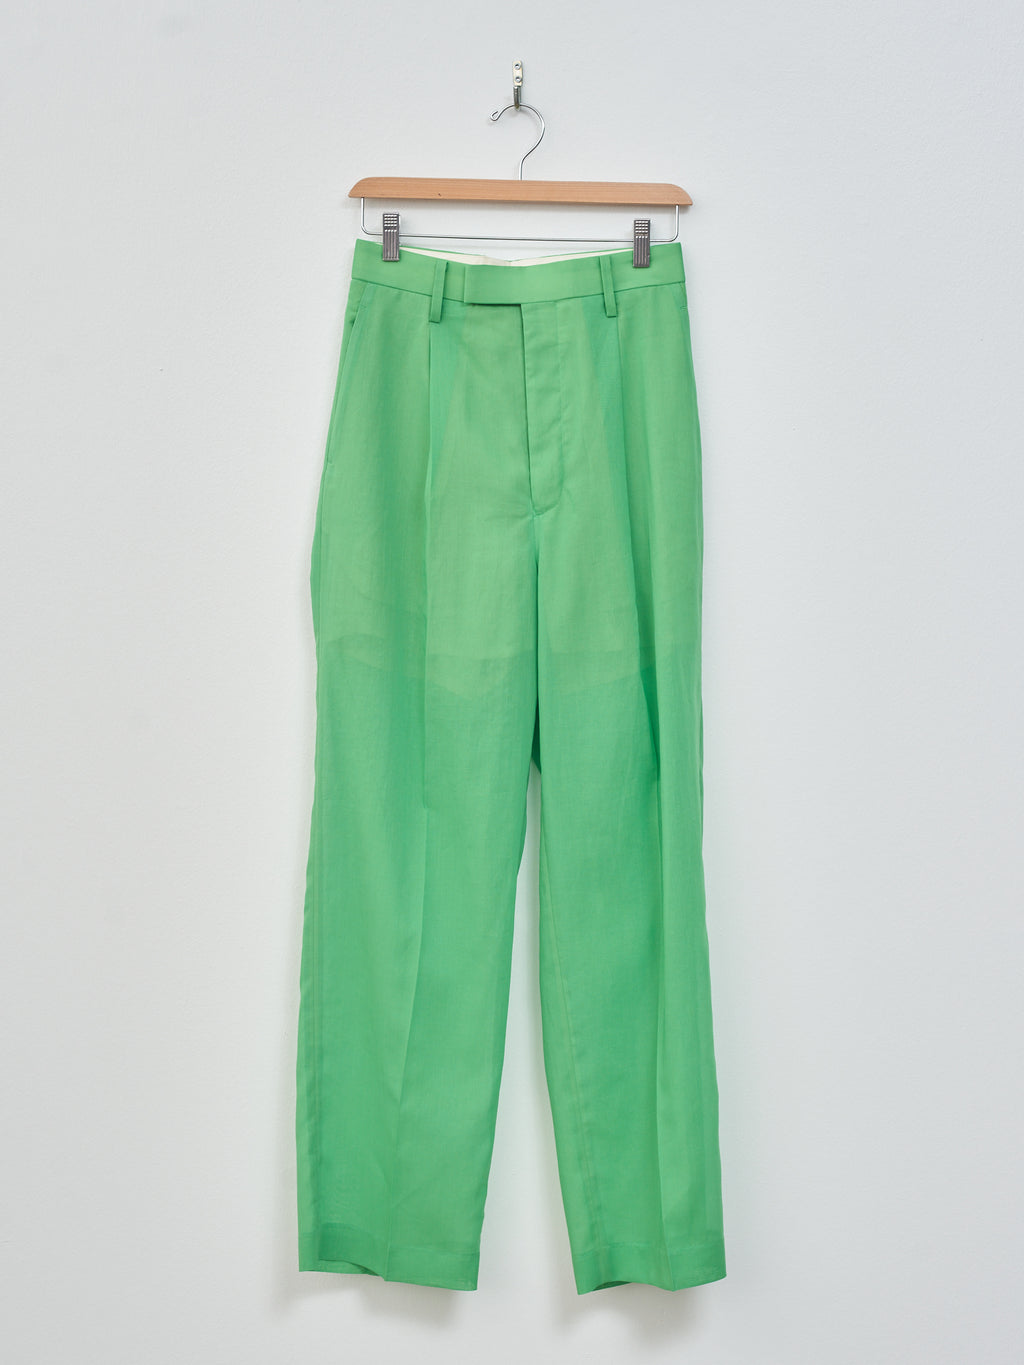 Namu Shop - Auralee Hard Twist Finx Organdy Pants - Green